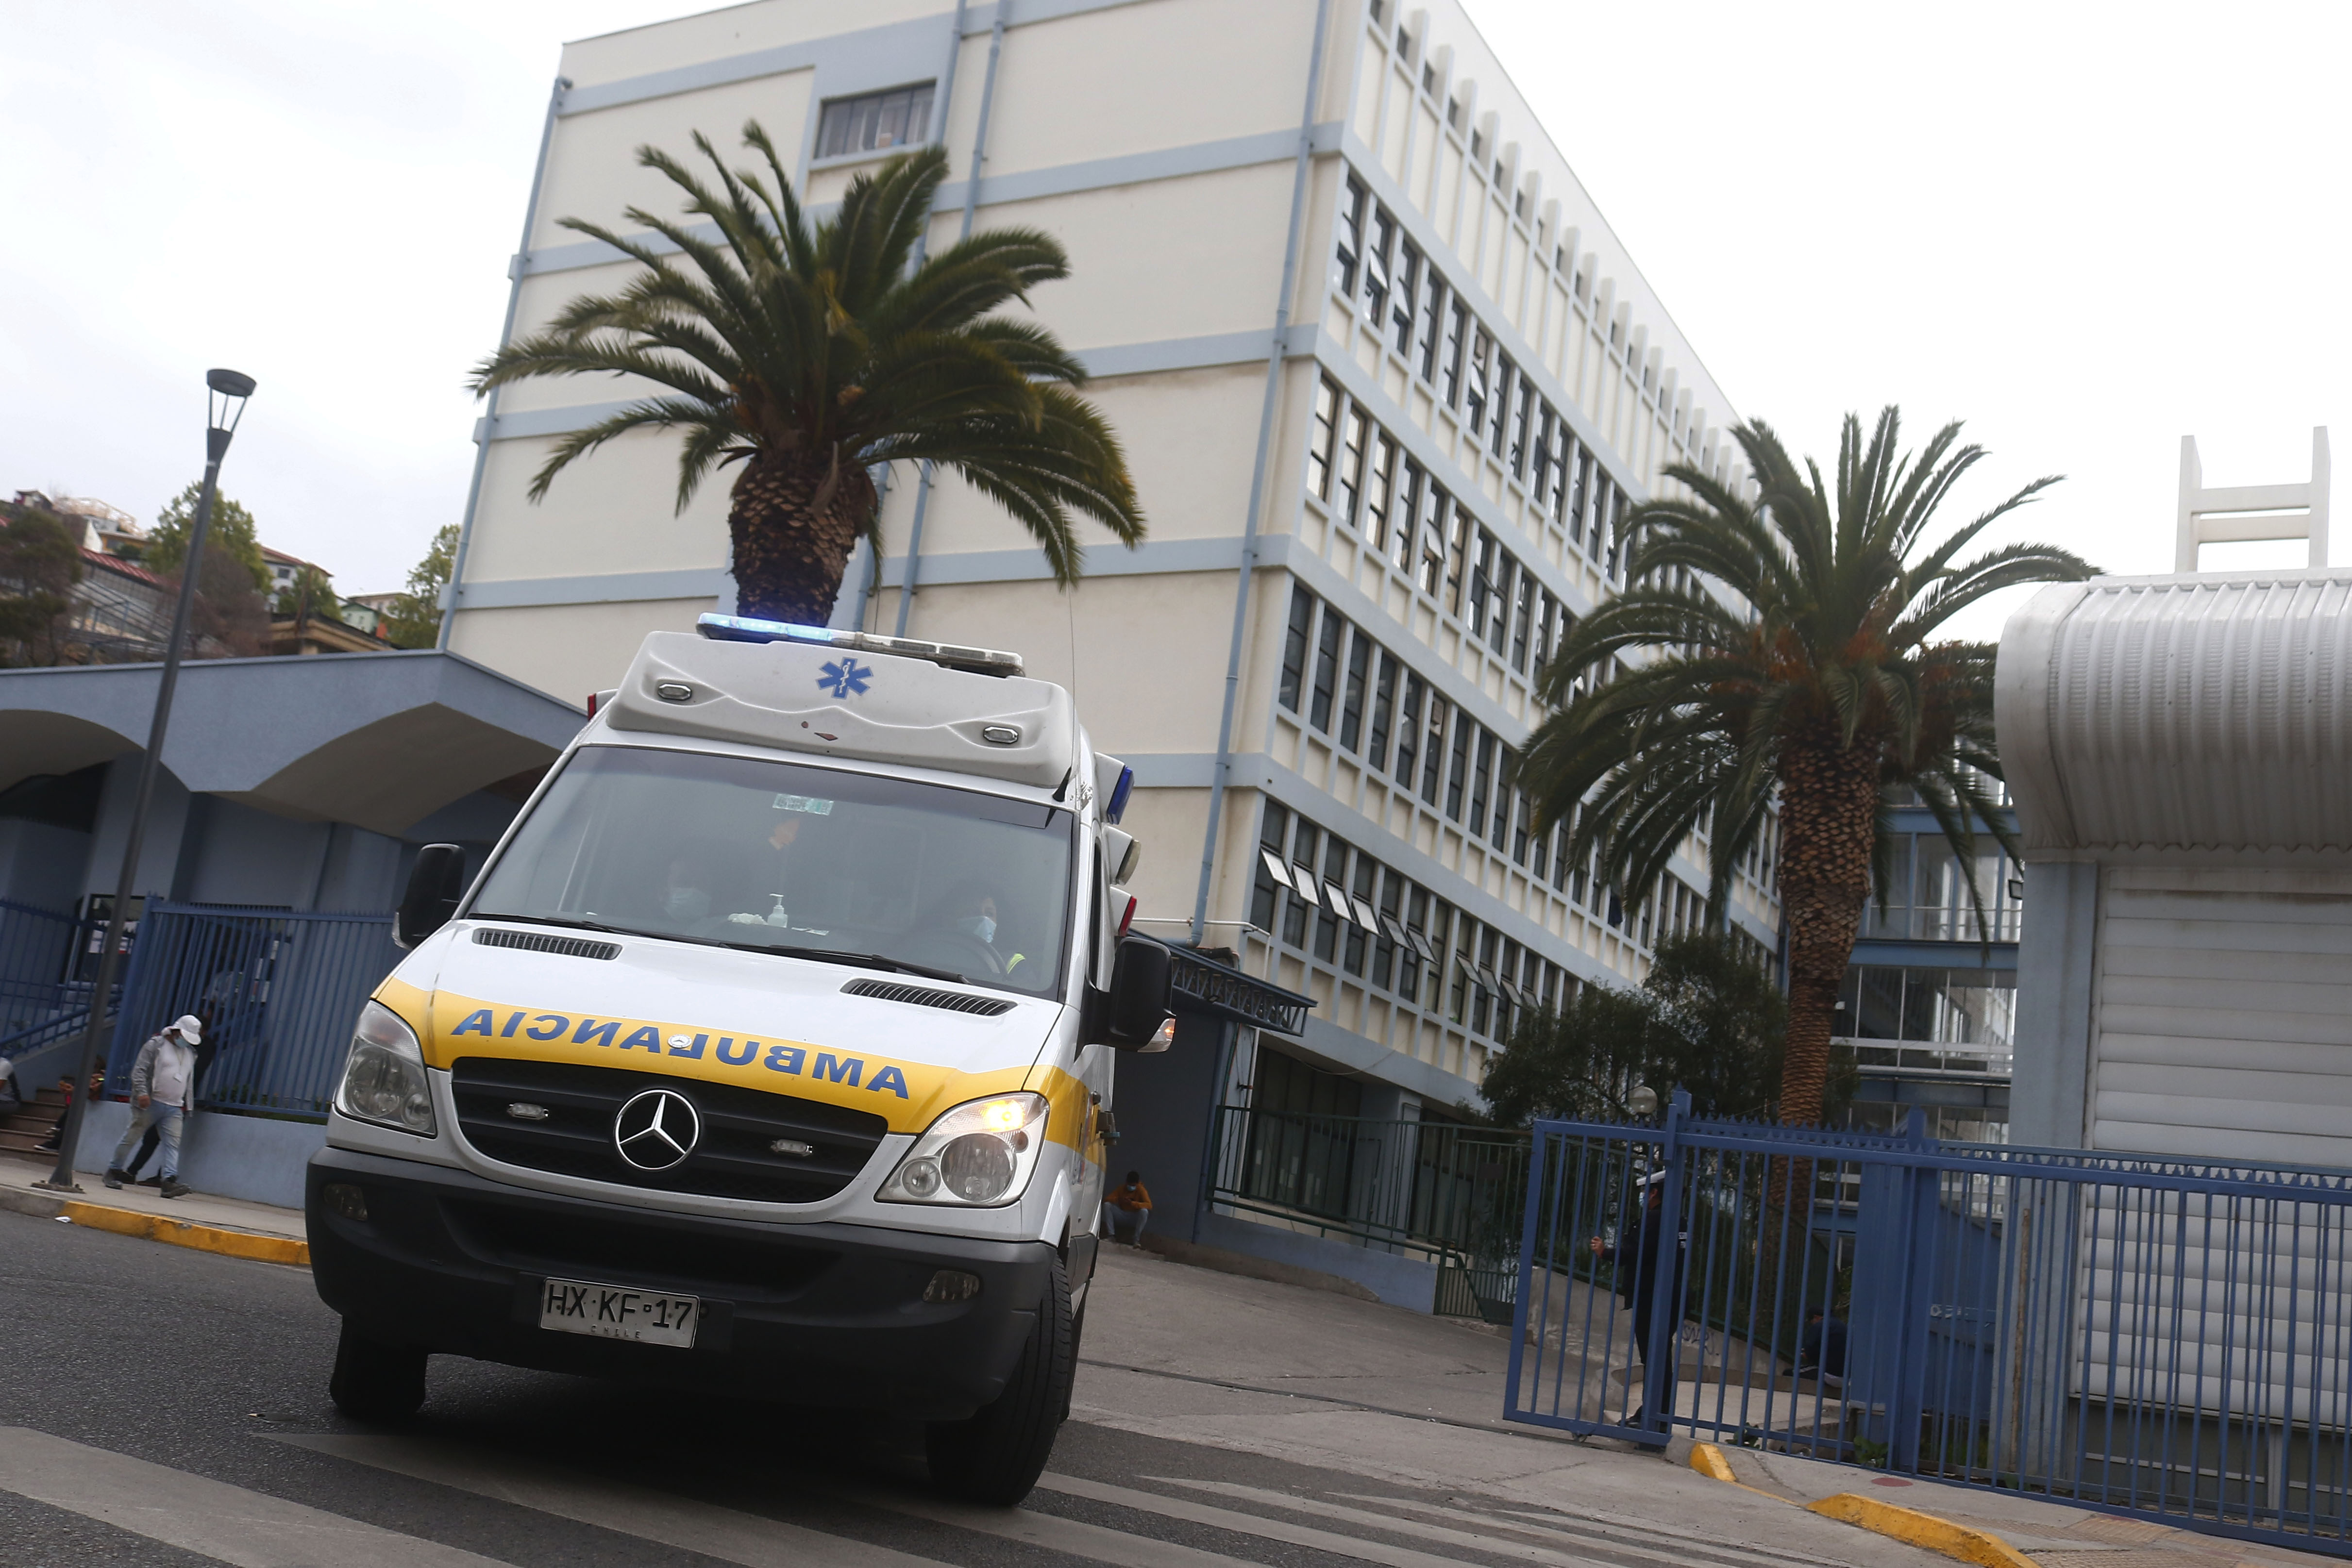 Valparaiso: Trasladan A Hospital Van Buren A Lactante Herido A Bala En El Tabo